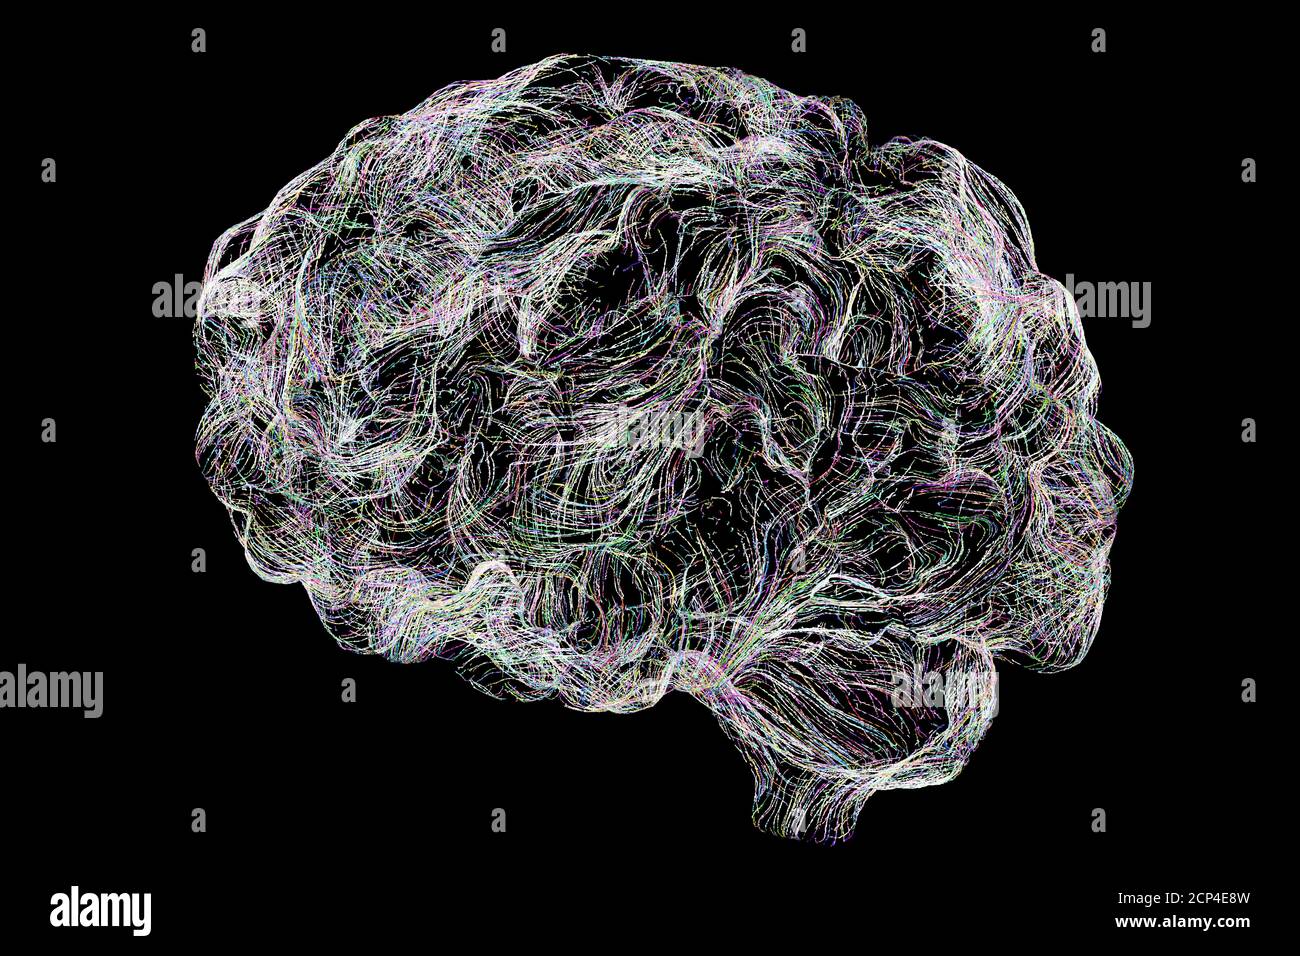 Brain neural network, computer illustration. Stock Photo